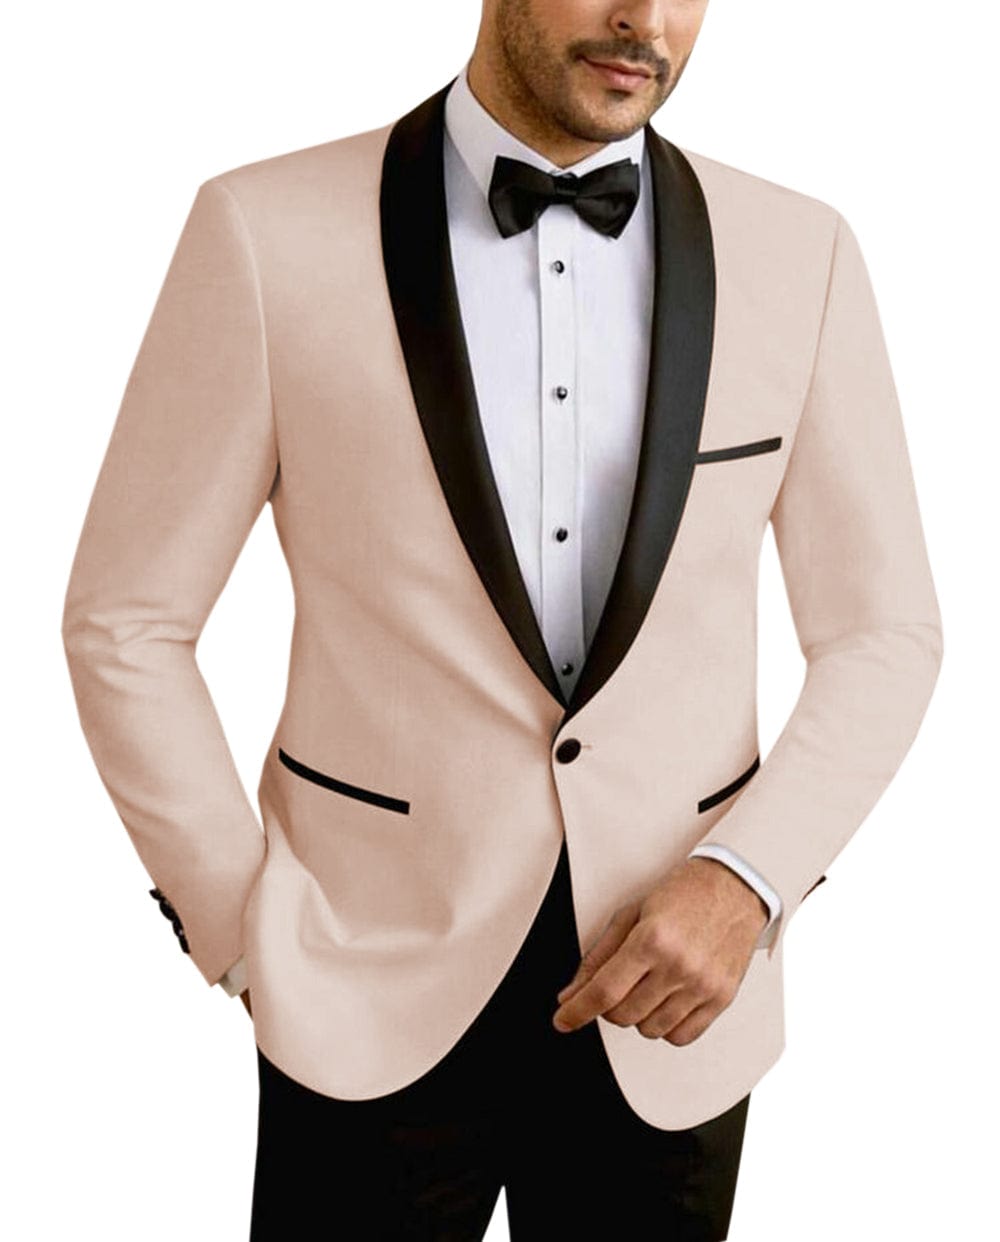 ceehuteey Men's Suit Jacket Slim Fit One Button Shawl Lapel Tuxedo Wedding Groomsmen Blazer